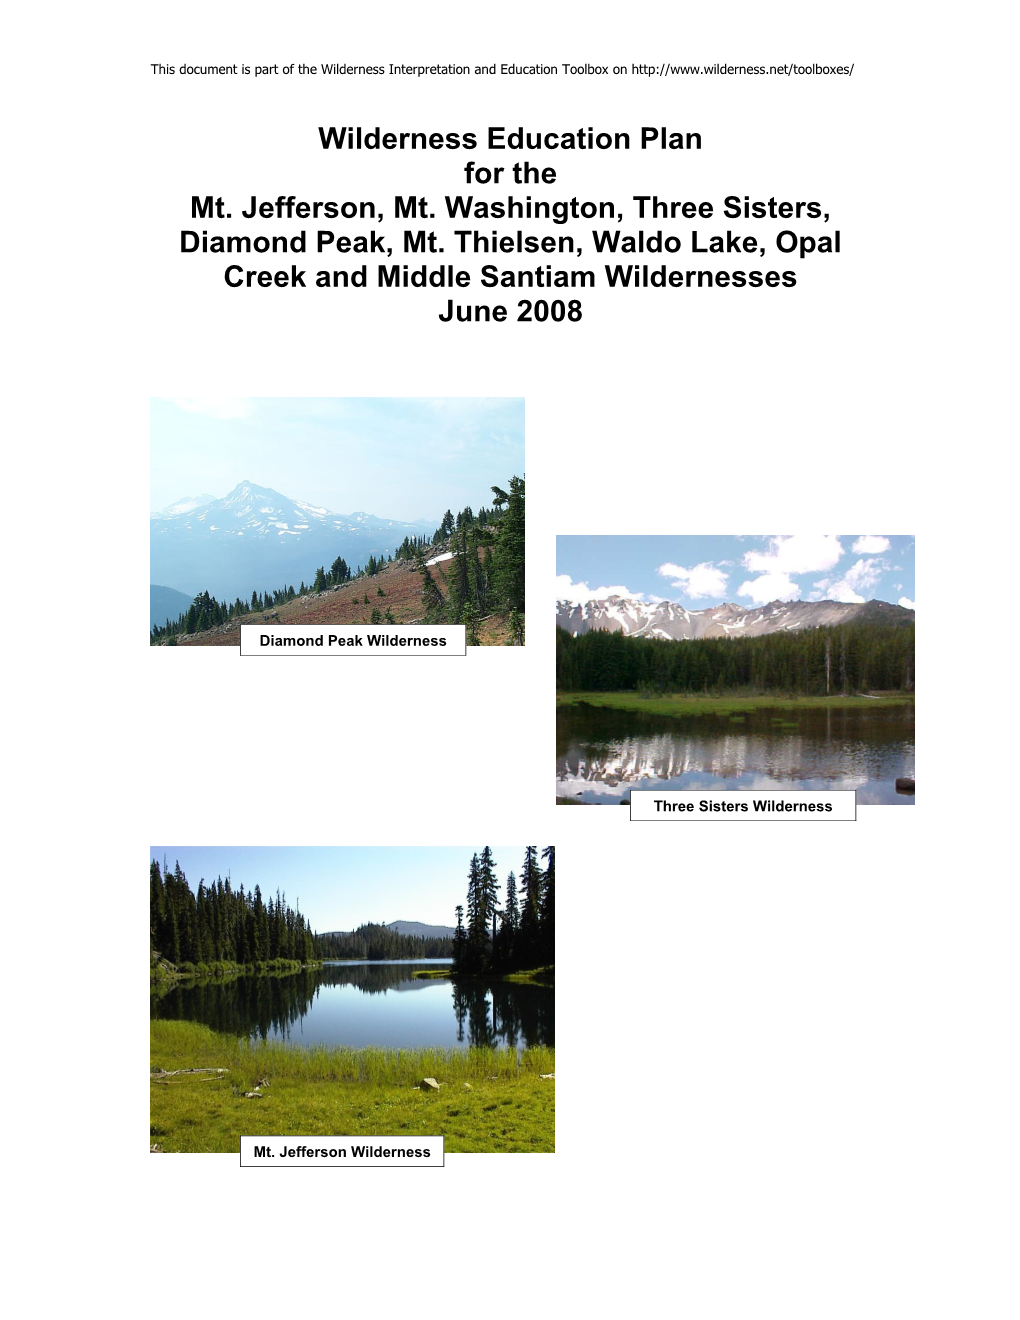 Wilderness Education Plan for the Mt. Jefferson, Mt. Washington, Three Sisters, Diamond